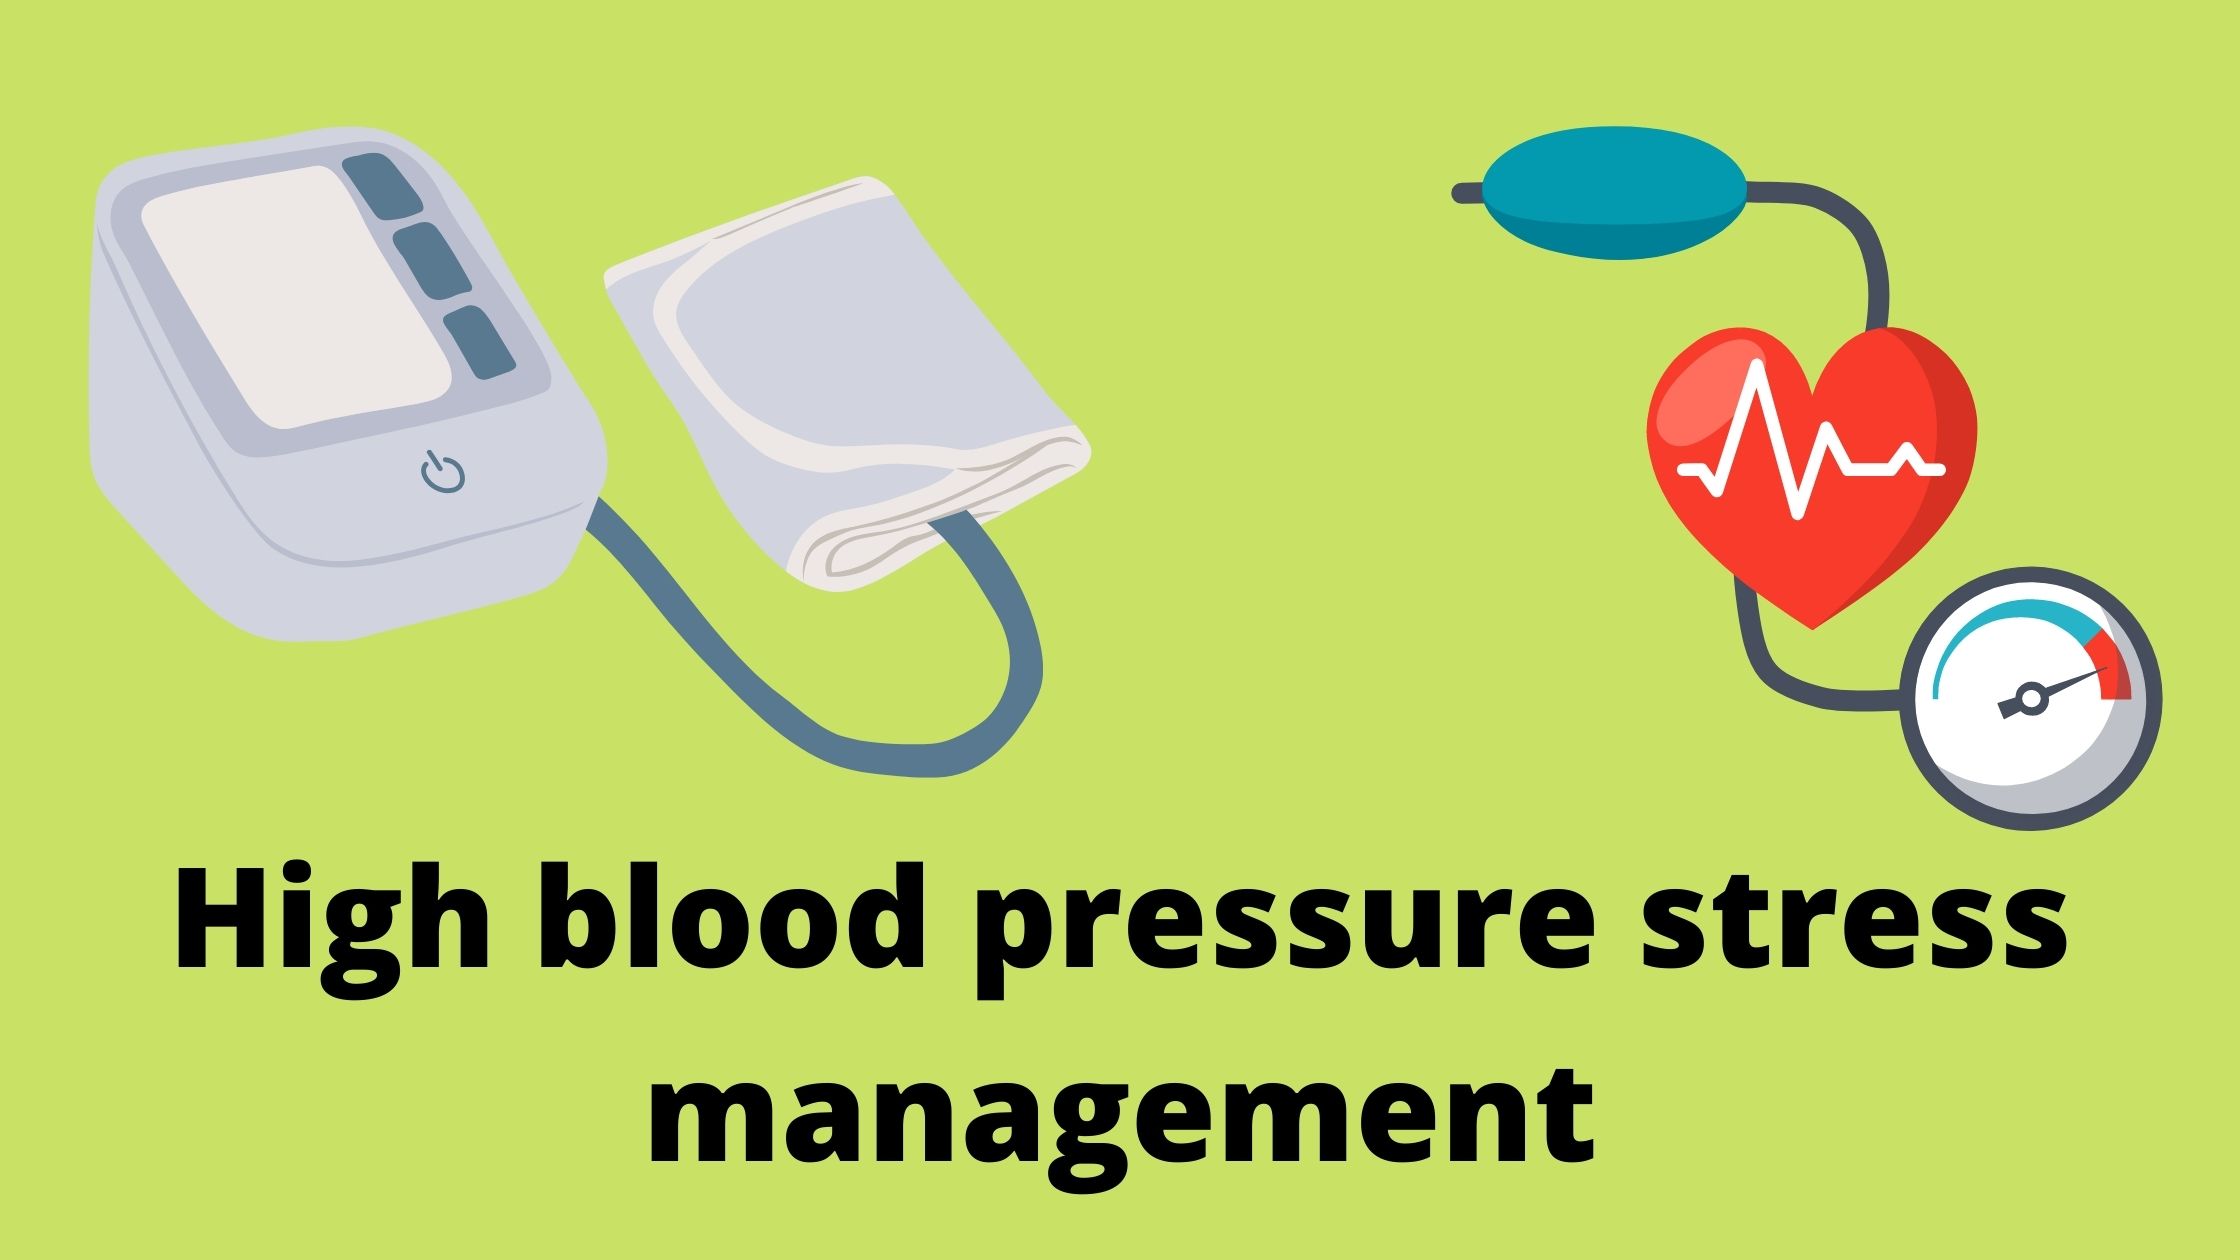 High blood pressure stress management